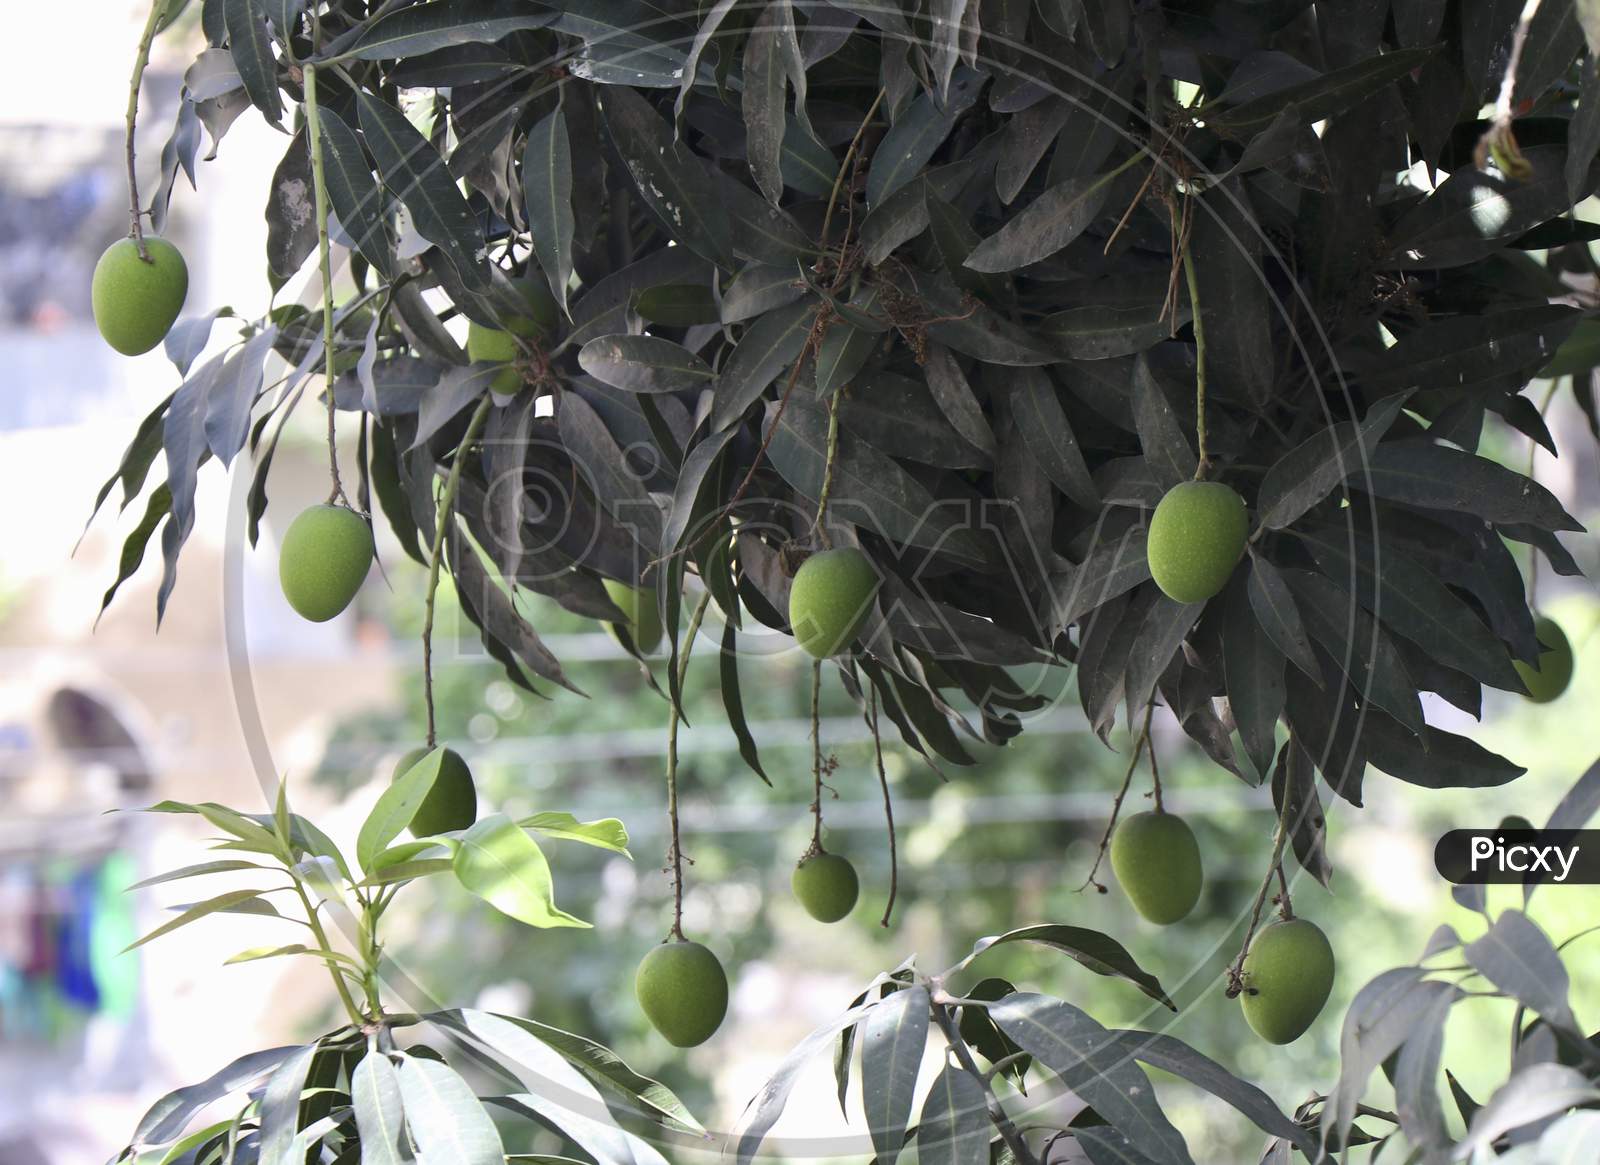 Unripe mangos hanging on a mango tree